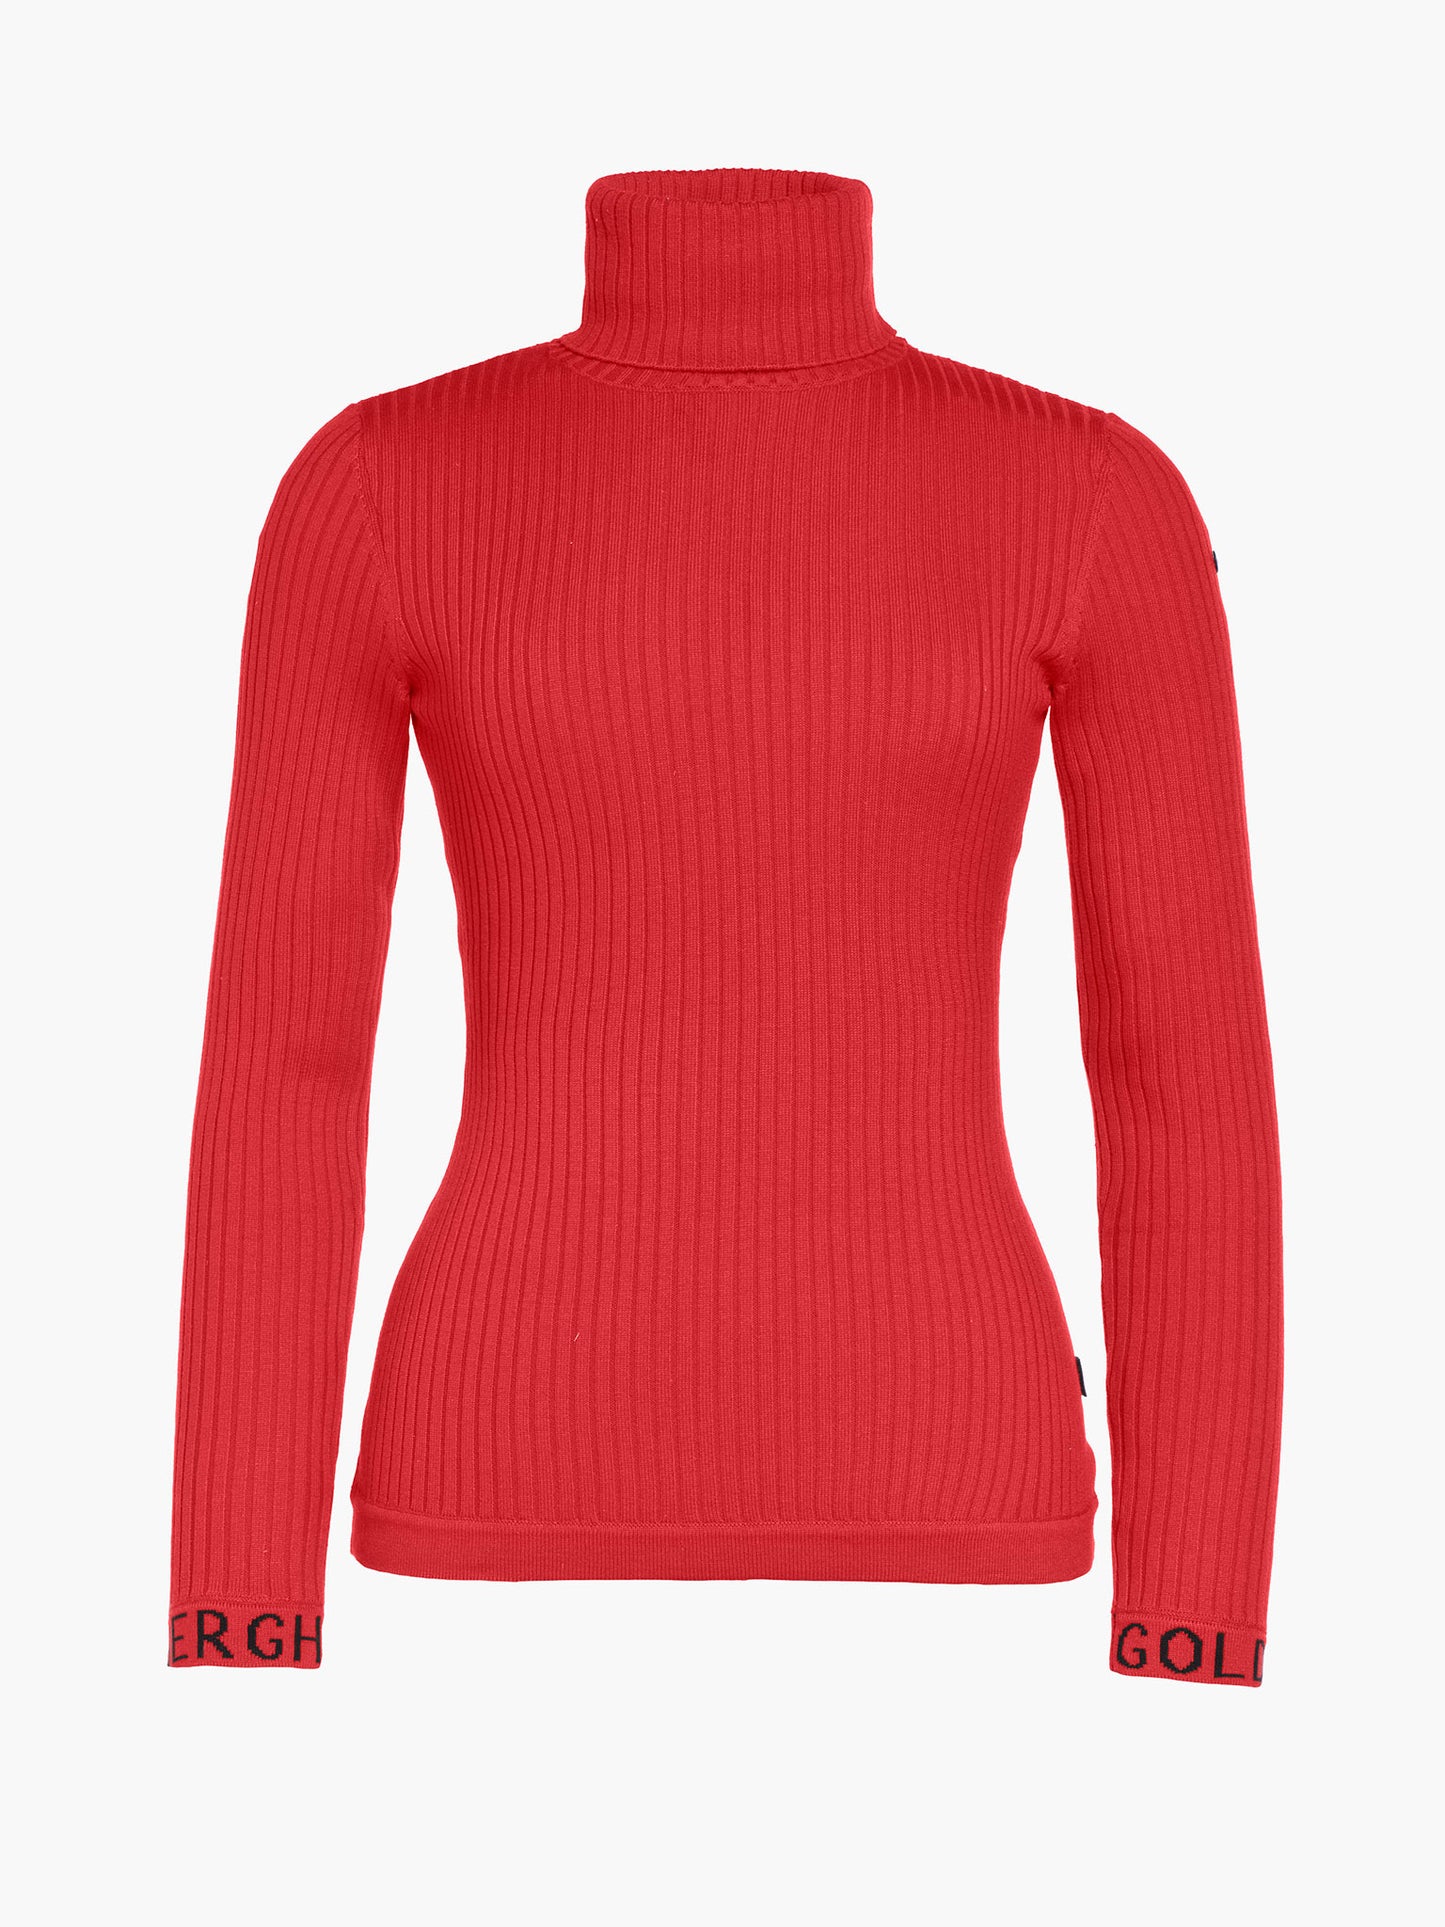 MIRA long sleeve knit sweater